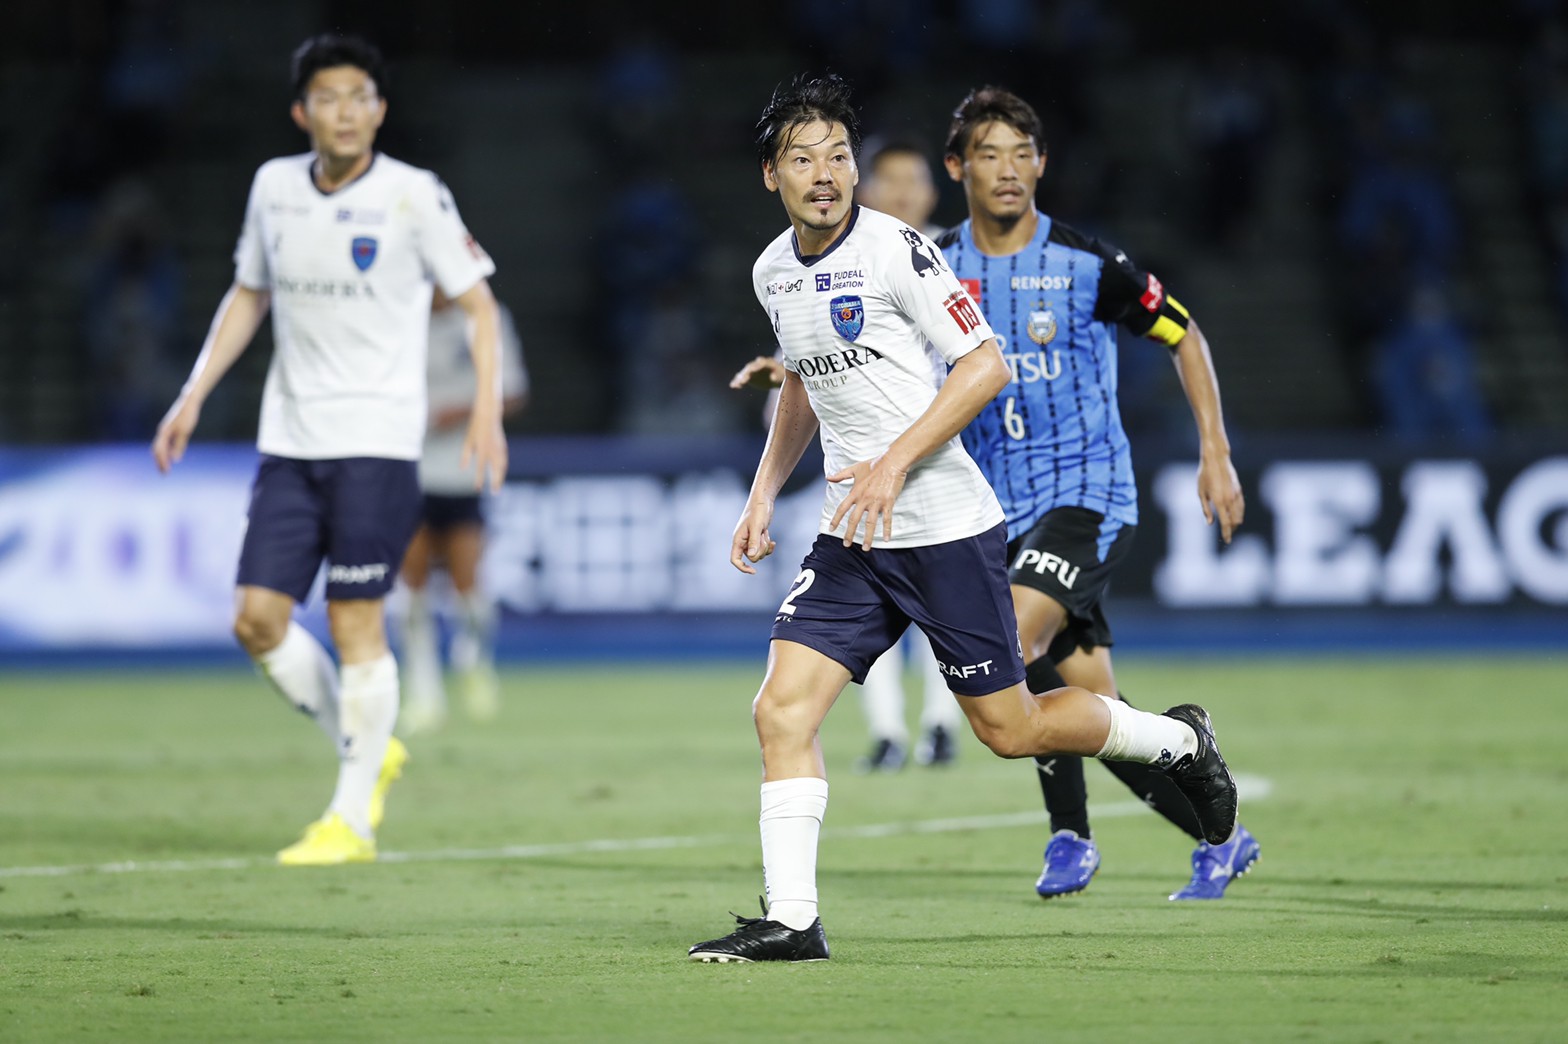 Japanese veteran midfielder Daisuke Matsui joins Saigon FC